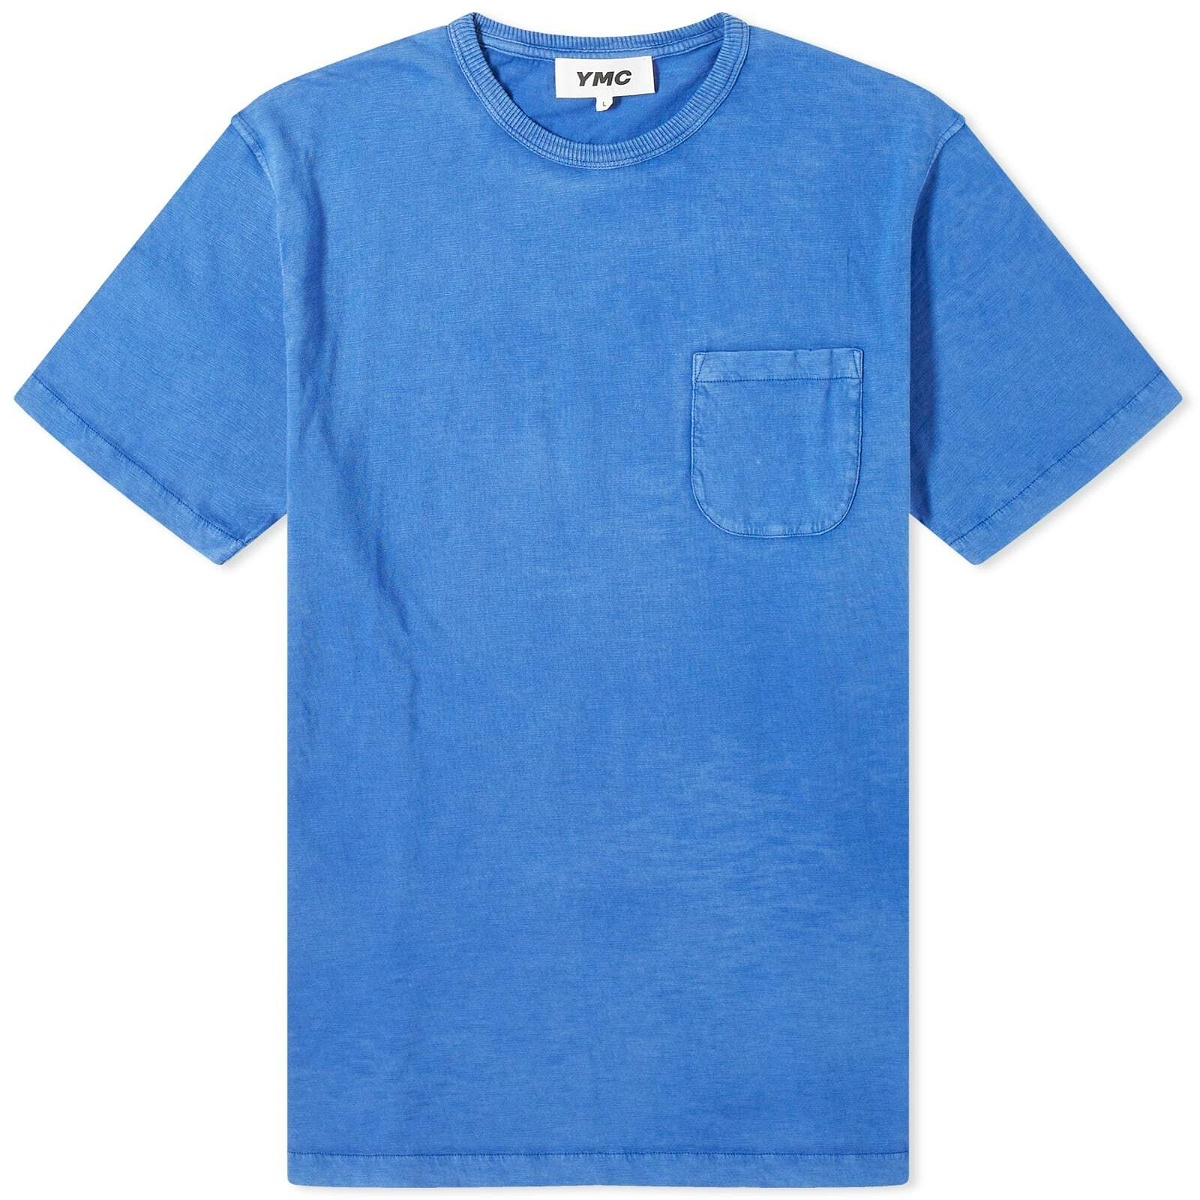 Photo: YMC Men's Wild Ones Pocket T-Shirt in Blue